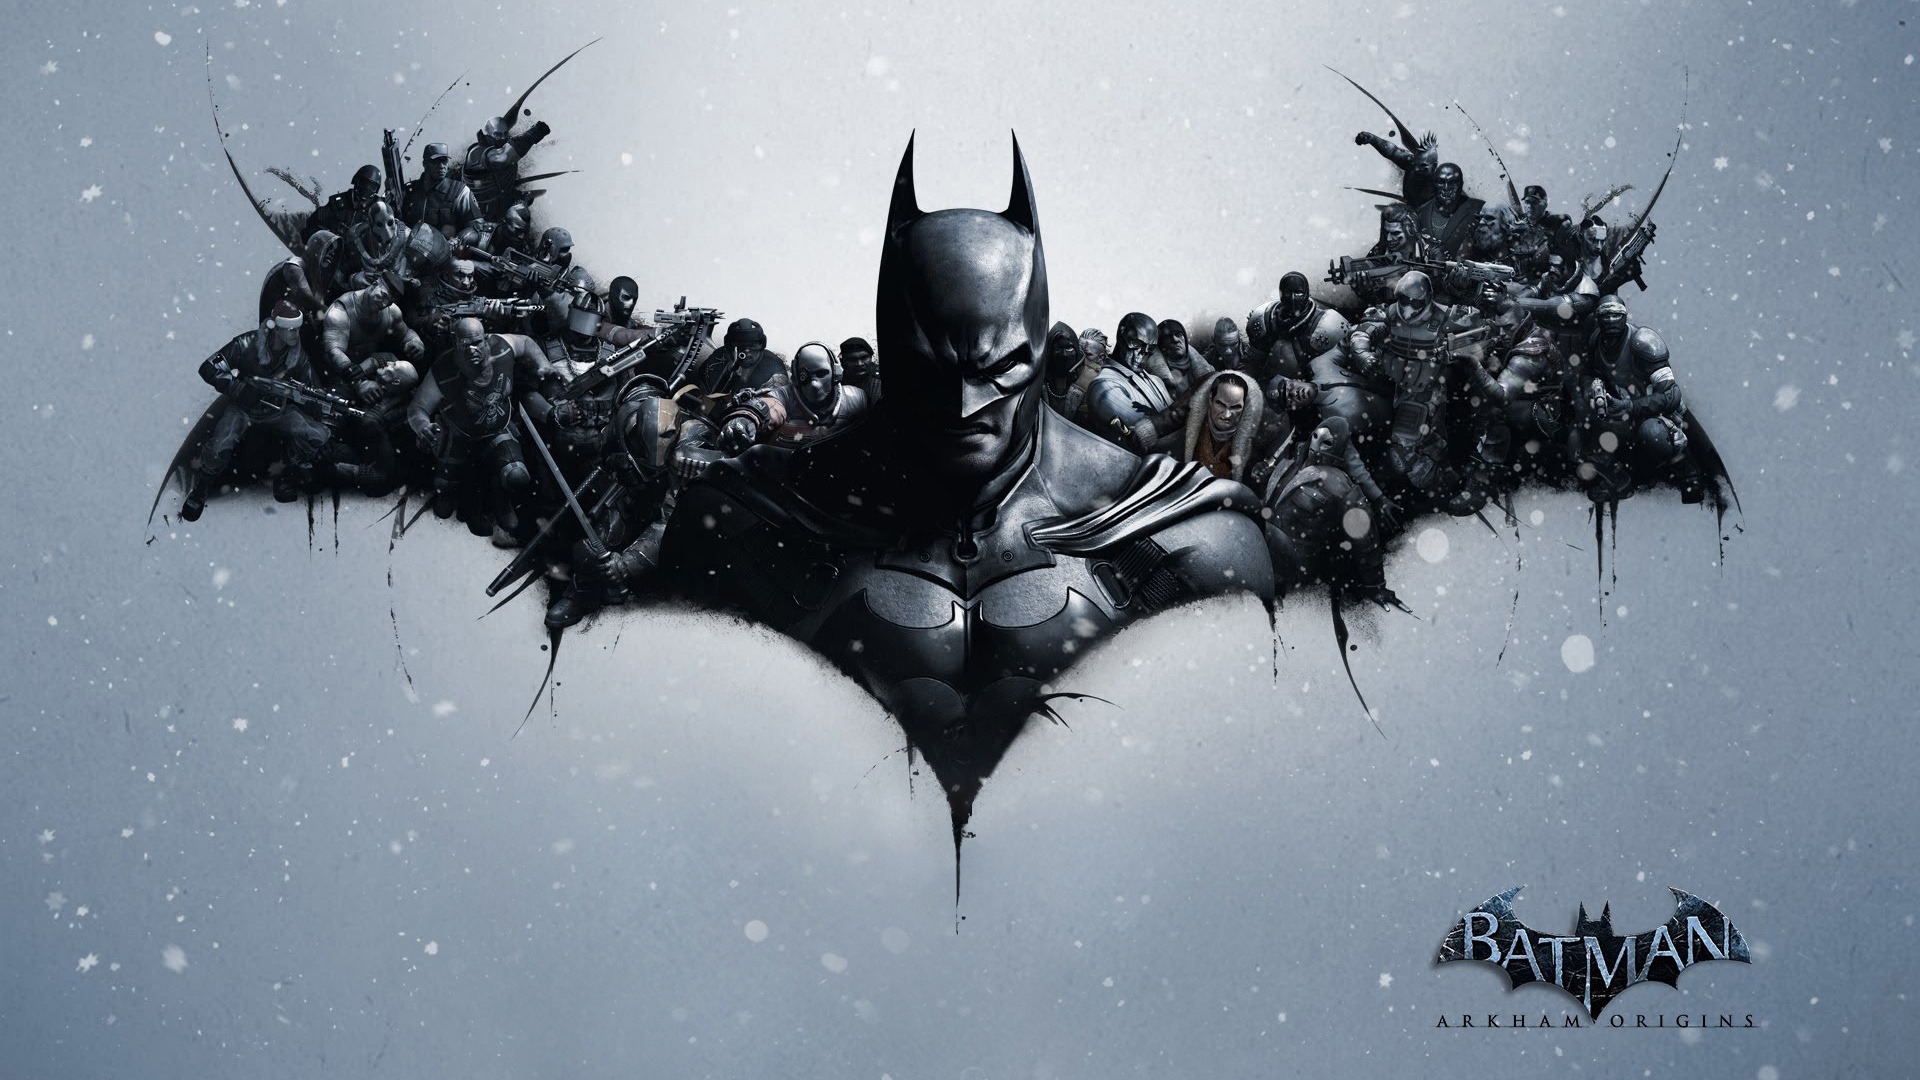 Batman Arkham Origins for 1920 x 1080 HDTV 1080p resolution